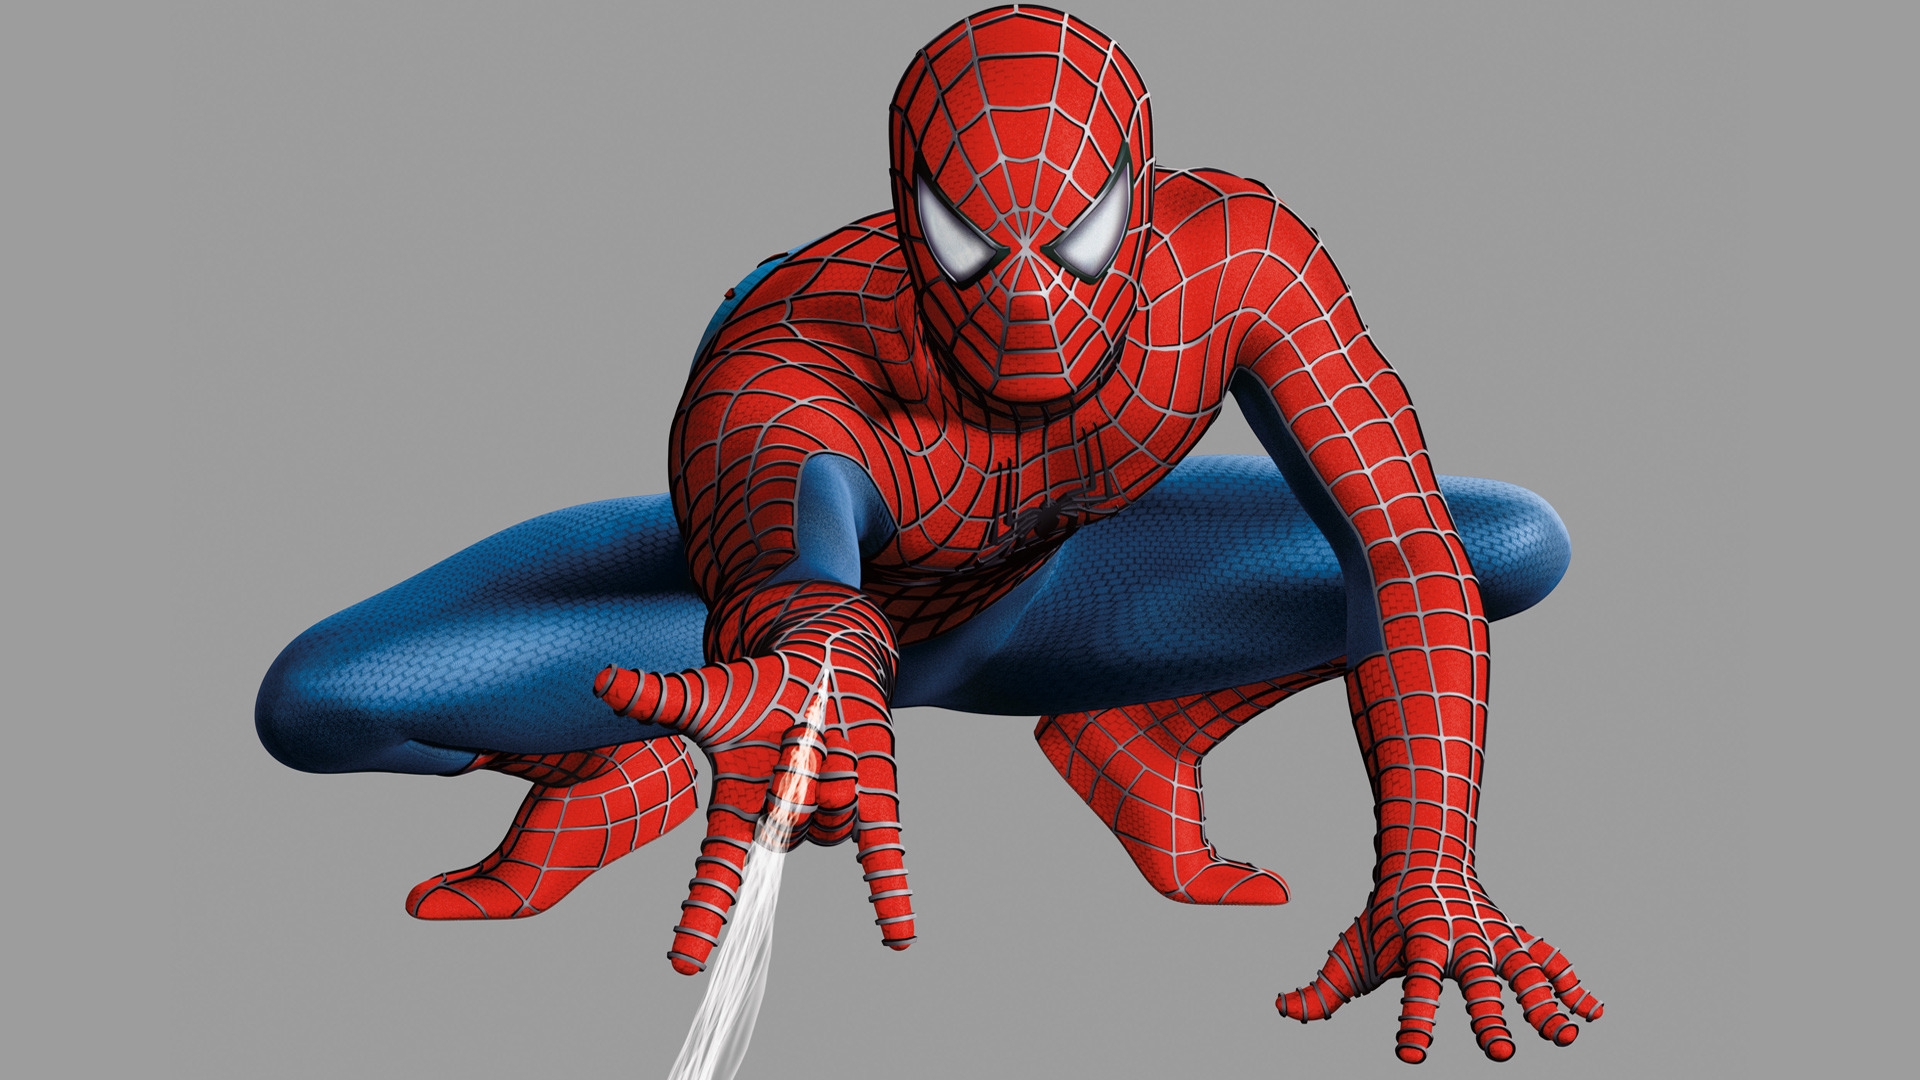 Spiderman 4 for 1920 x 1080 HDTV 1080p resolution